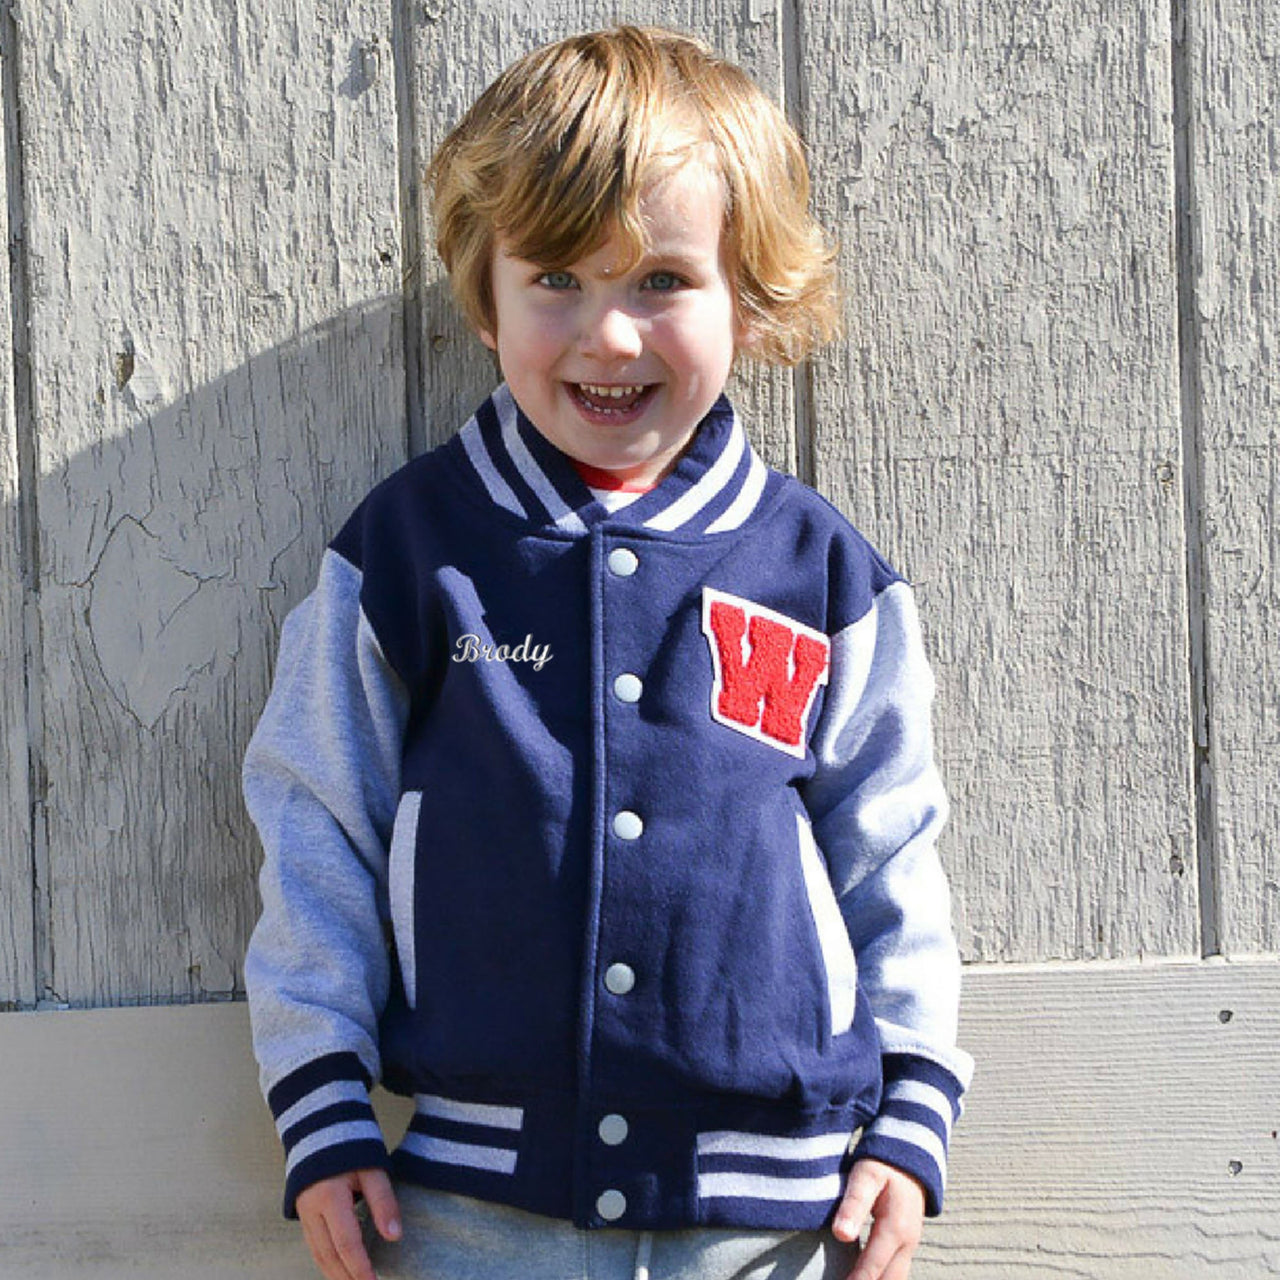 AWDis Kids Unisex Varsity Jacket / Schoolwear - Fire Red/White, 7-8